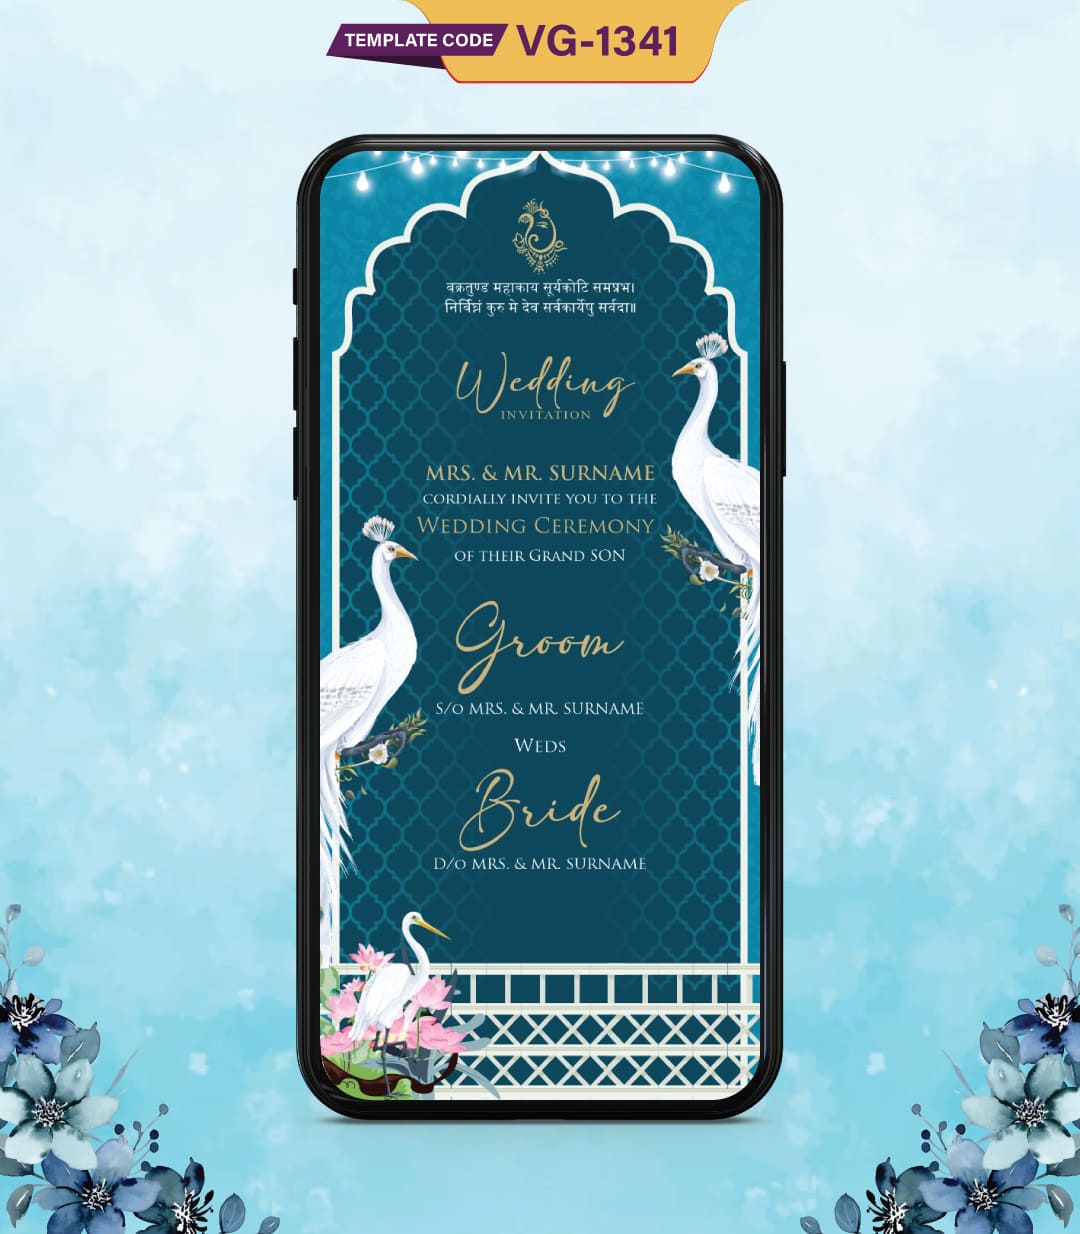 White Peacock Wedding Invitation Card